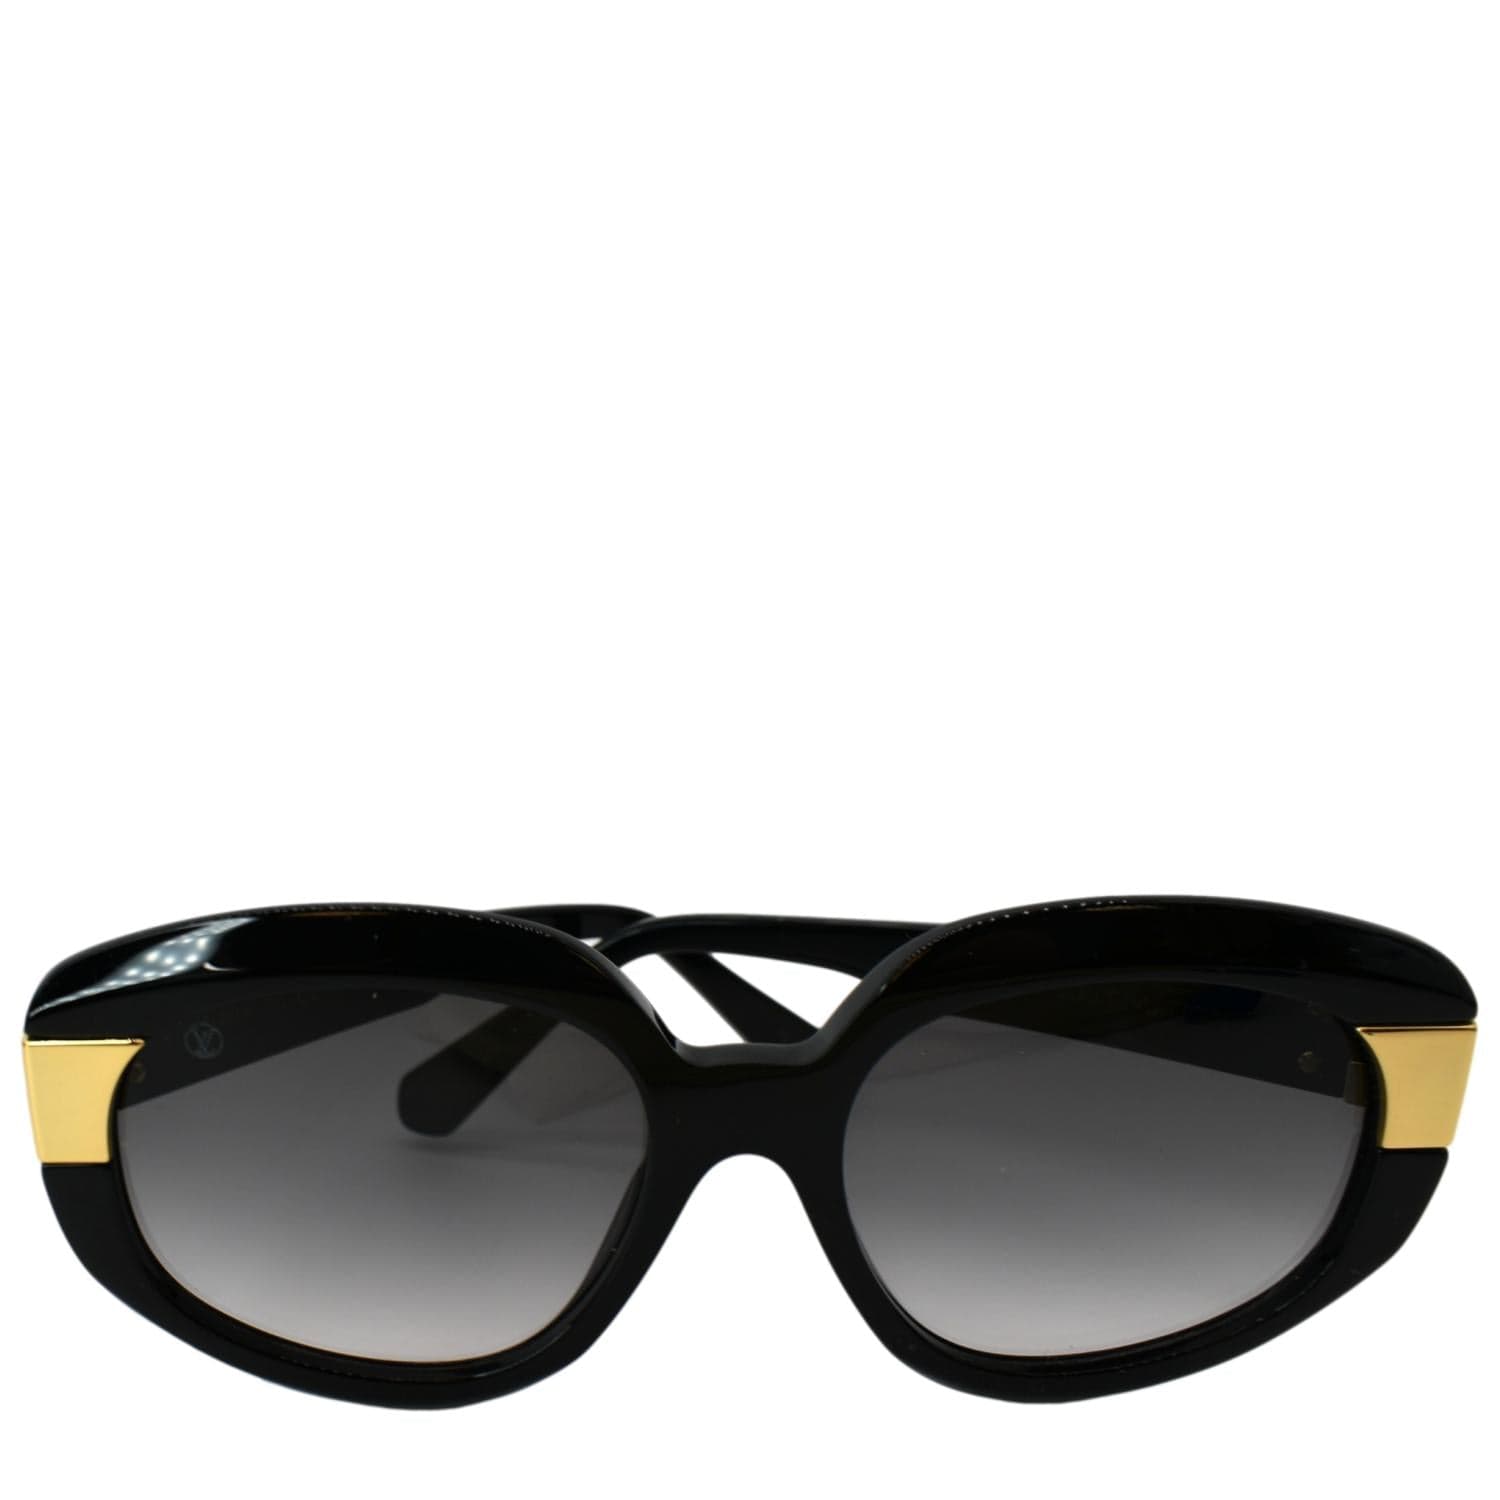 New Louis Vuitton designer sunglasses lv1581 black